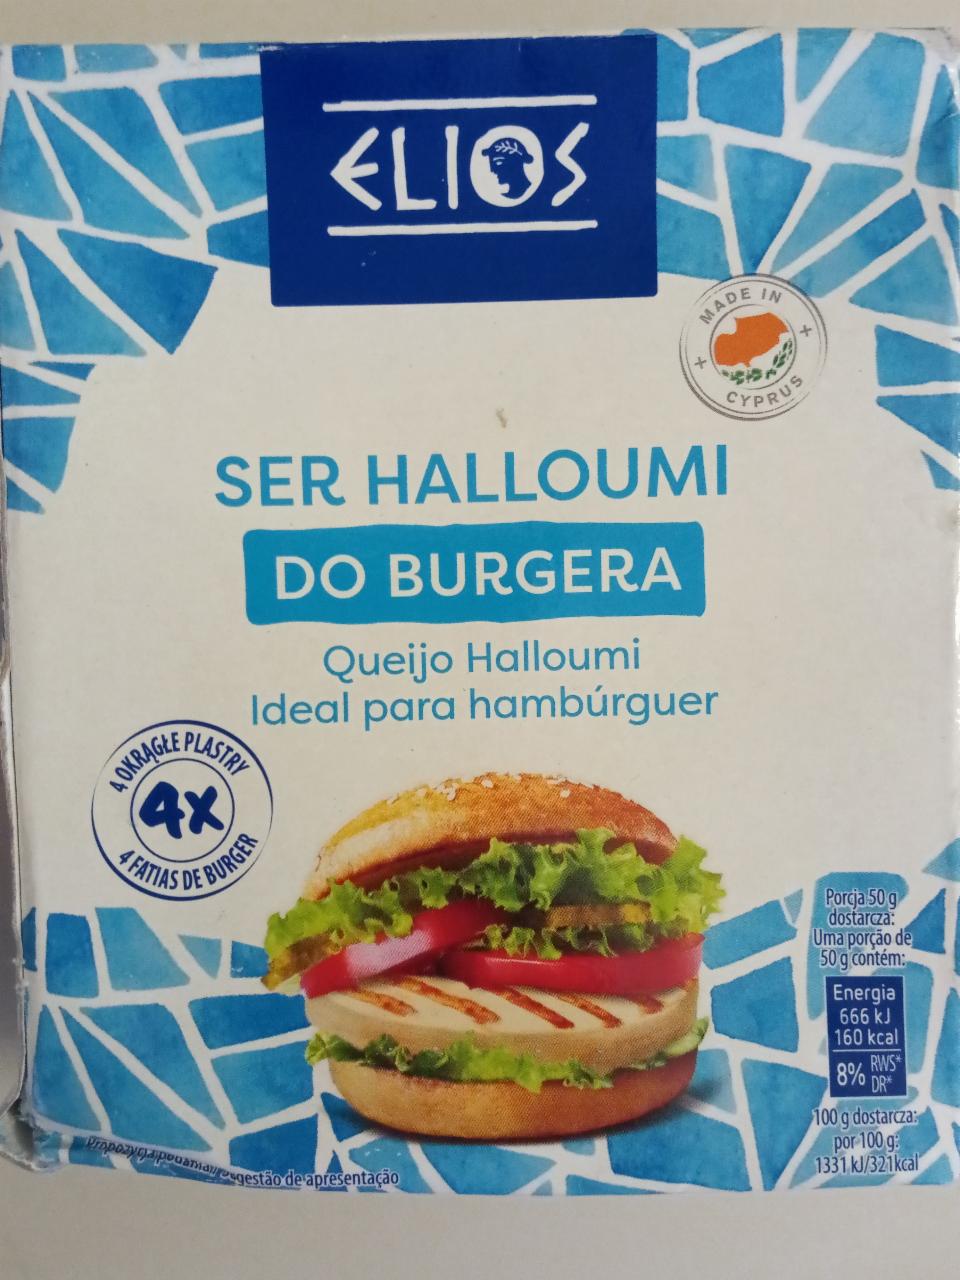 Zdjęcia - ser halloumi do burgera Elios